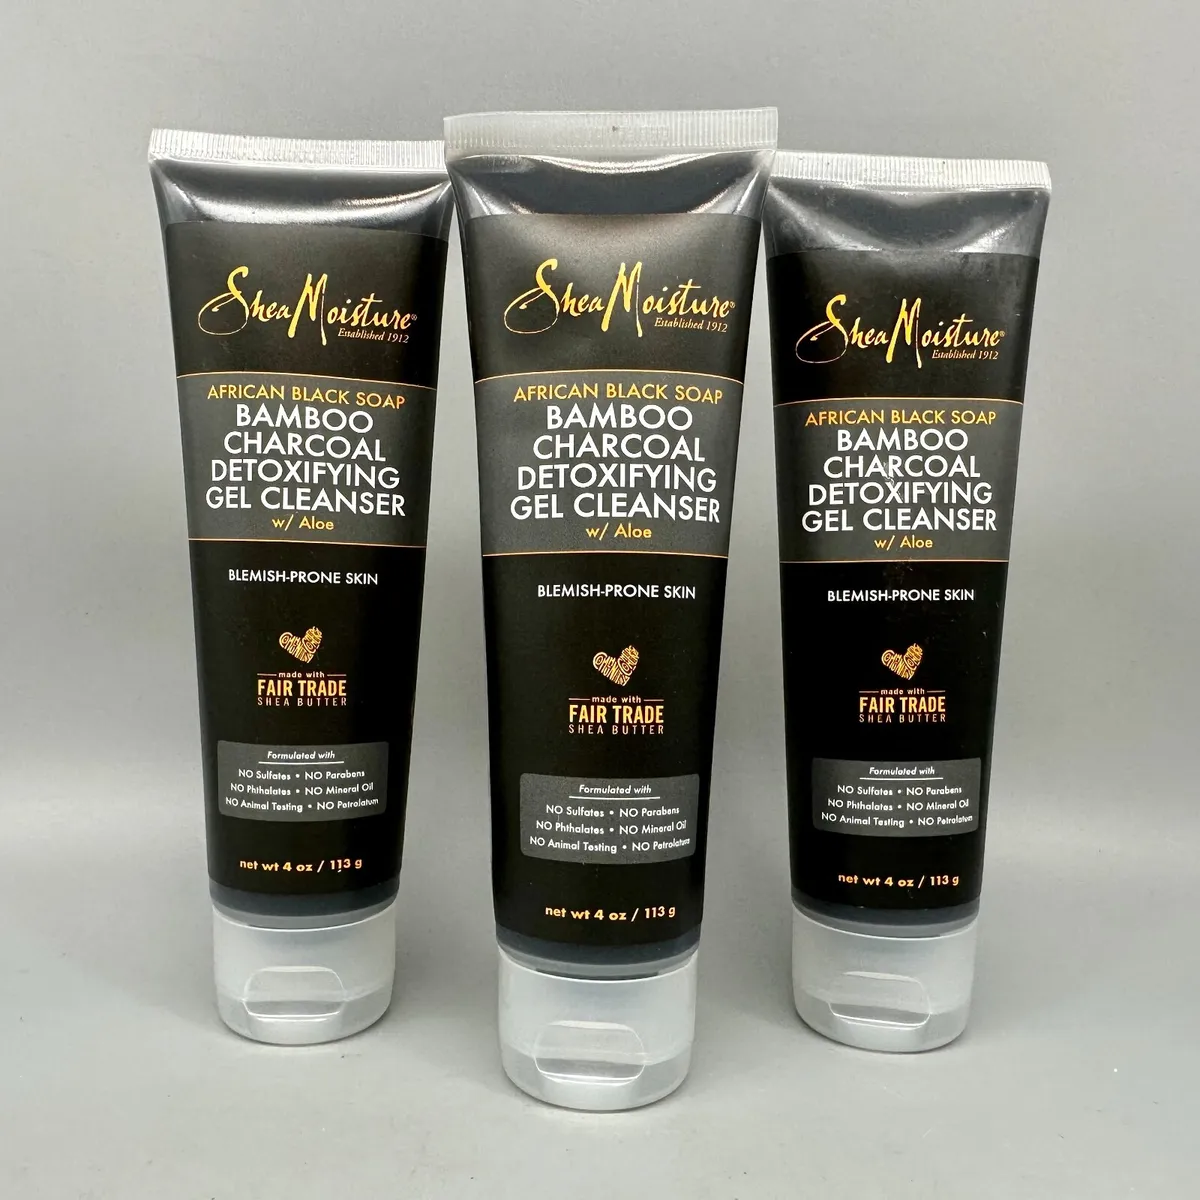 samling Peck Auto Shea moisture AFRICAN BLACK SOAP BAMBOO CHARCOAL DETOXIFYING GEL CLEANSER  3PK | eBay